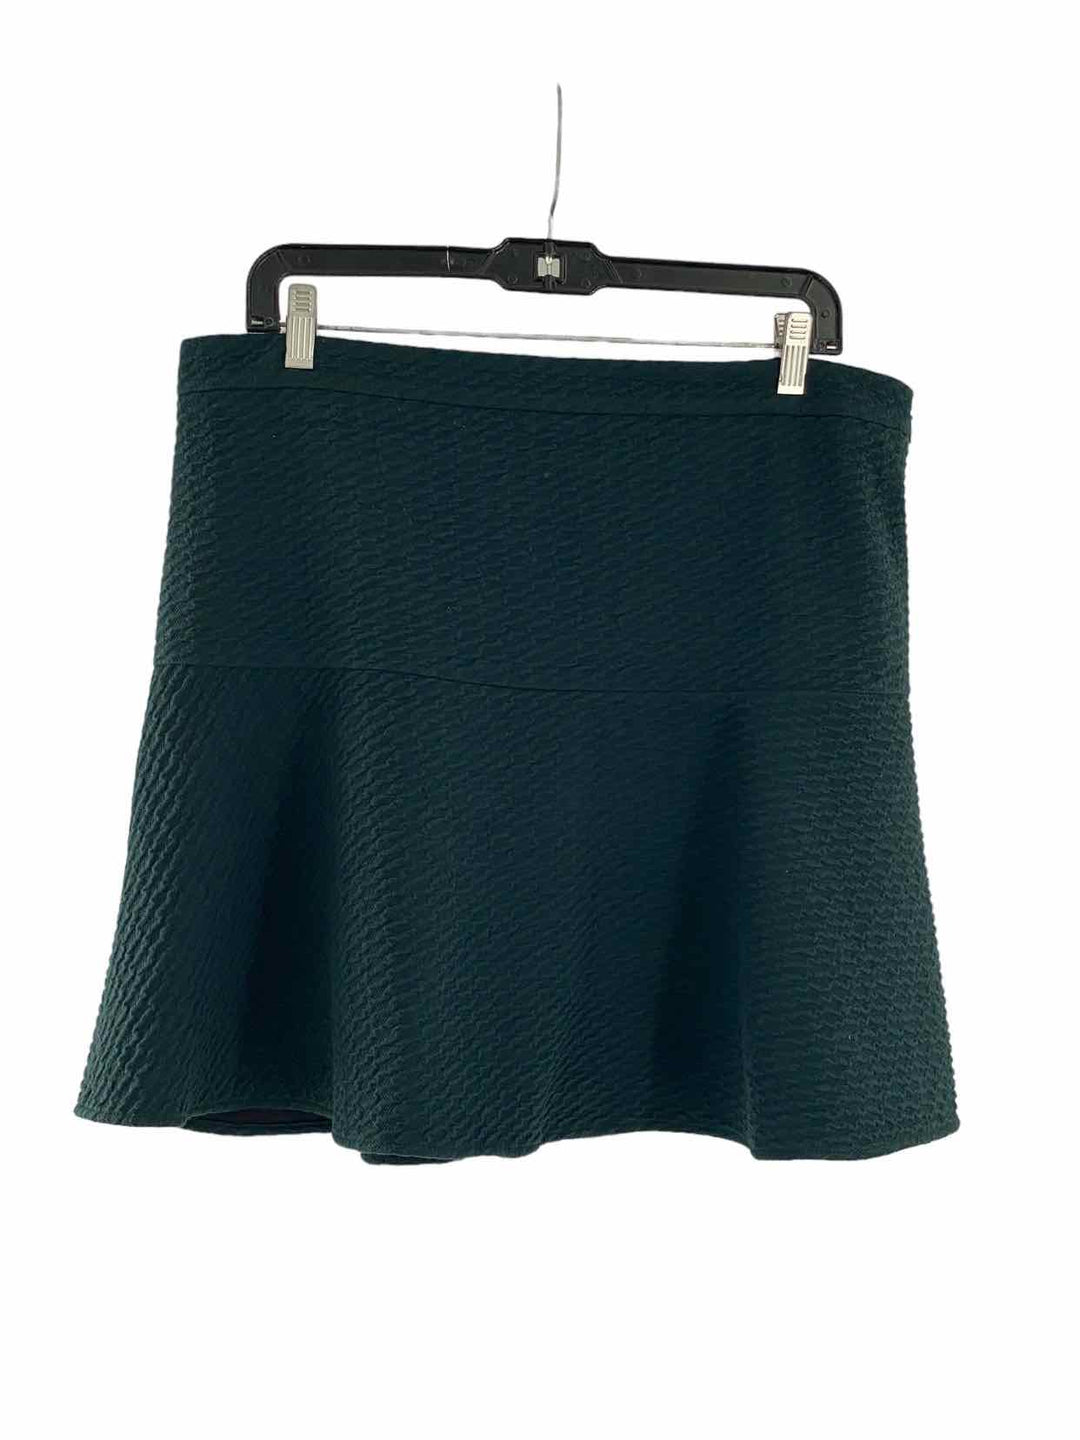 Loft Size L Green Skirt